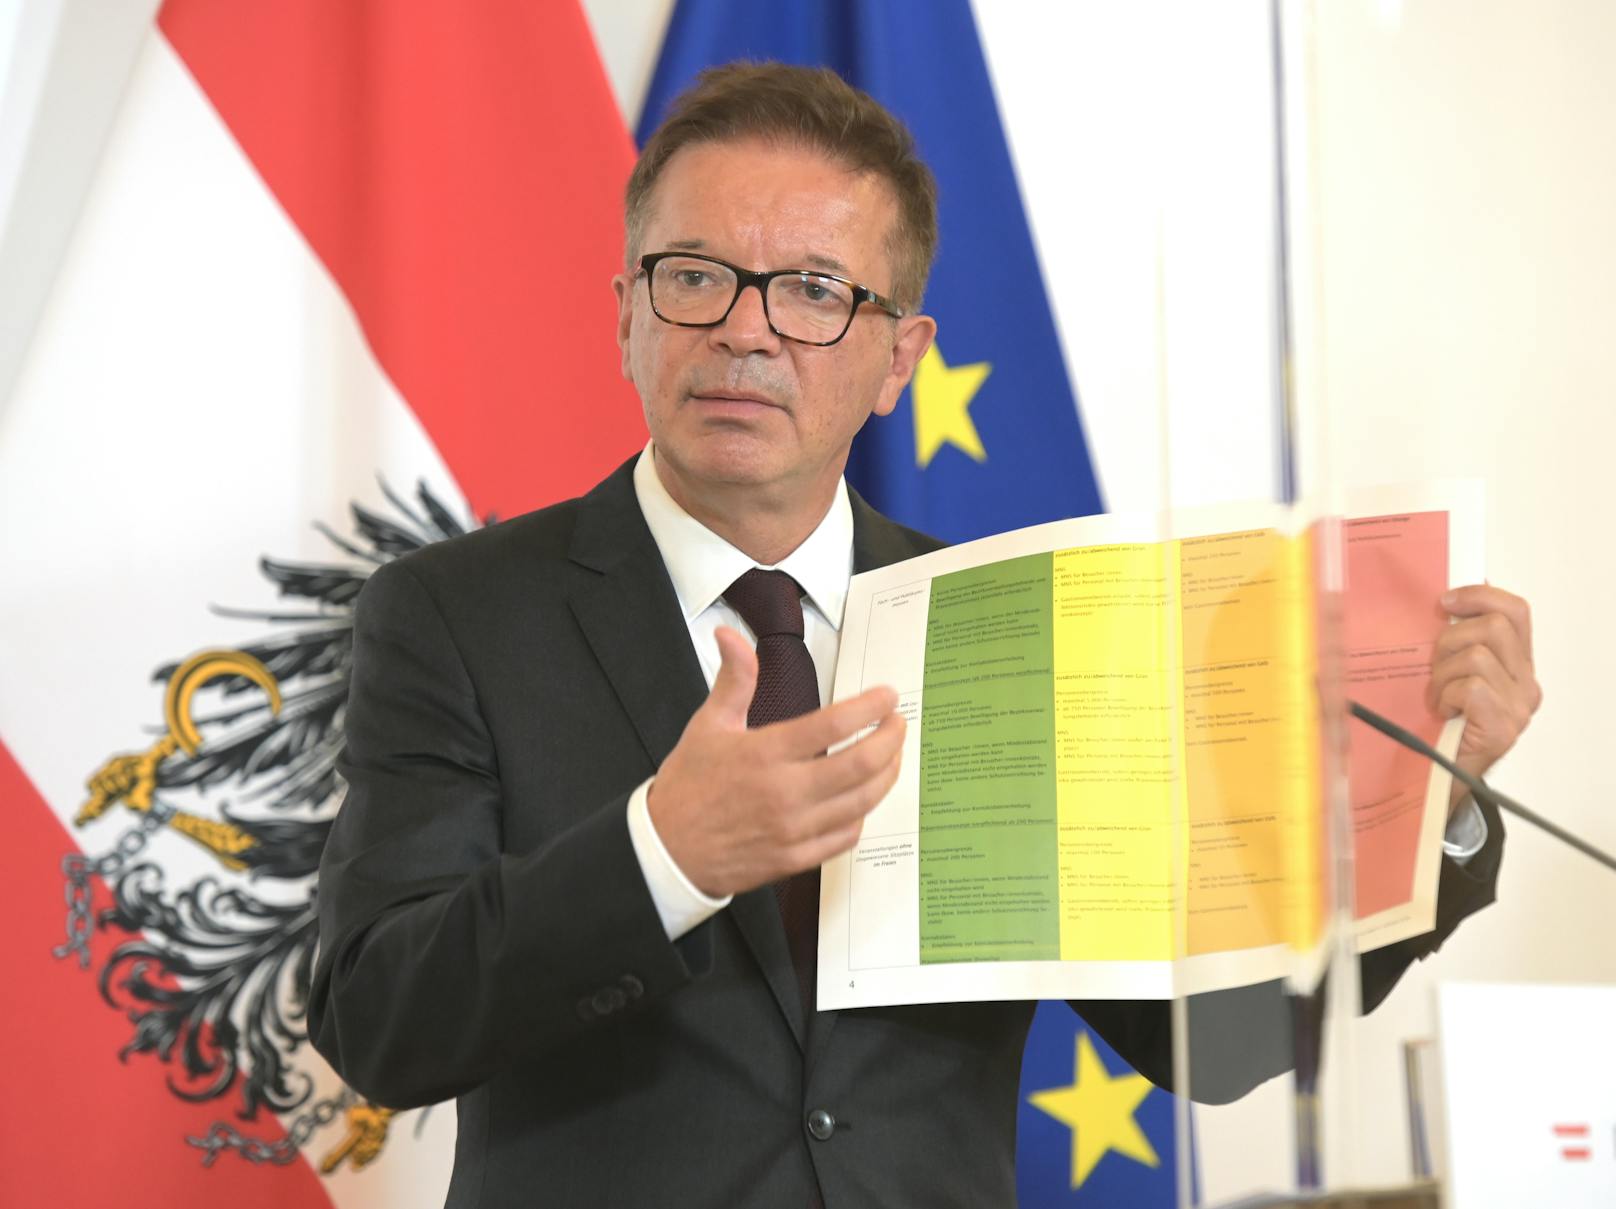 Gesundheitsminister Rudolf Anschober (Grüne) bei der Präsentation der Corona-Ampel" am 4. September 2020